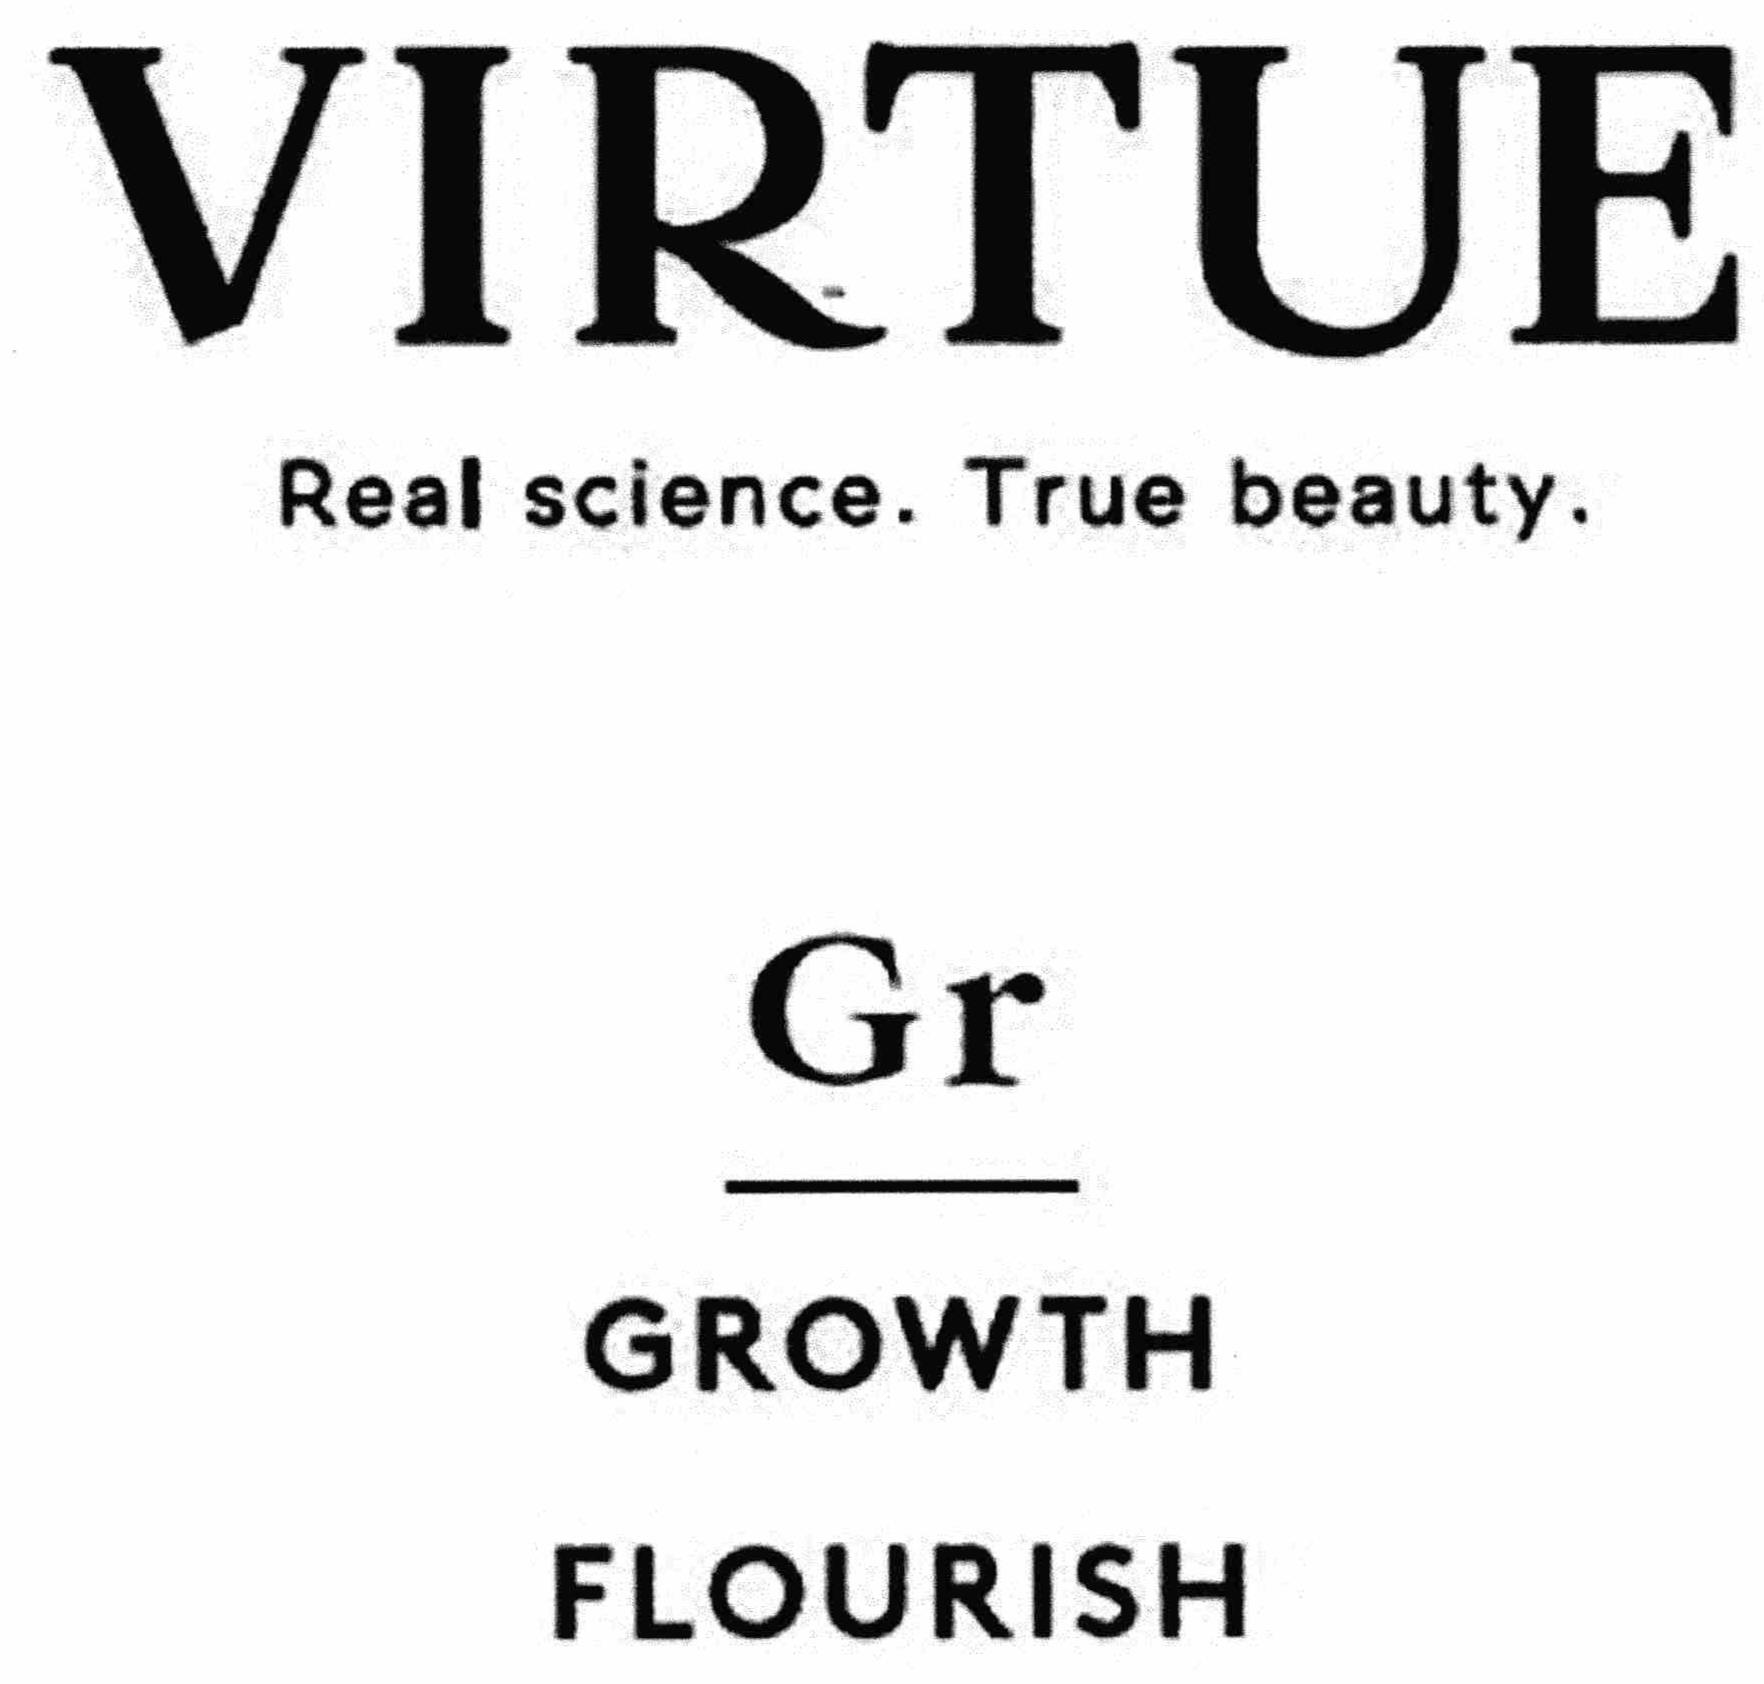  VIRTUE REAL SCIENCE. TRUE BEAUTY. GR GROWTH FLOURISH